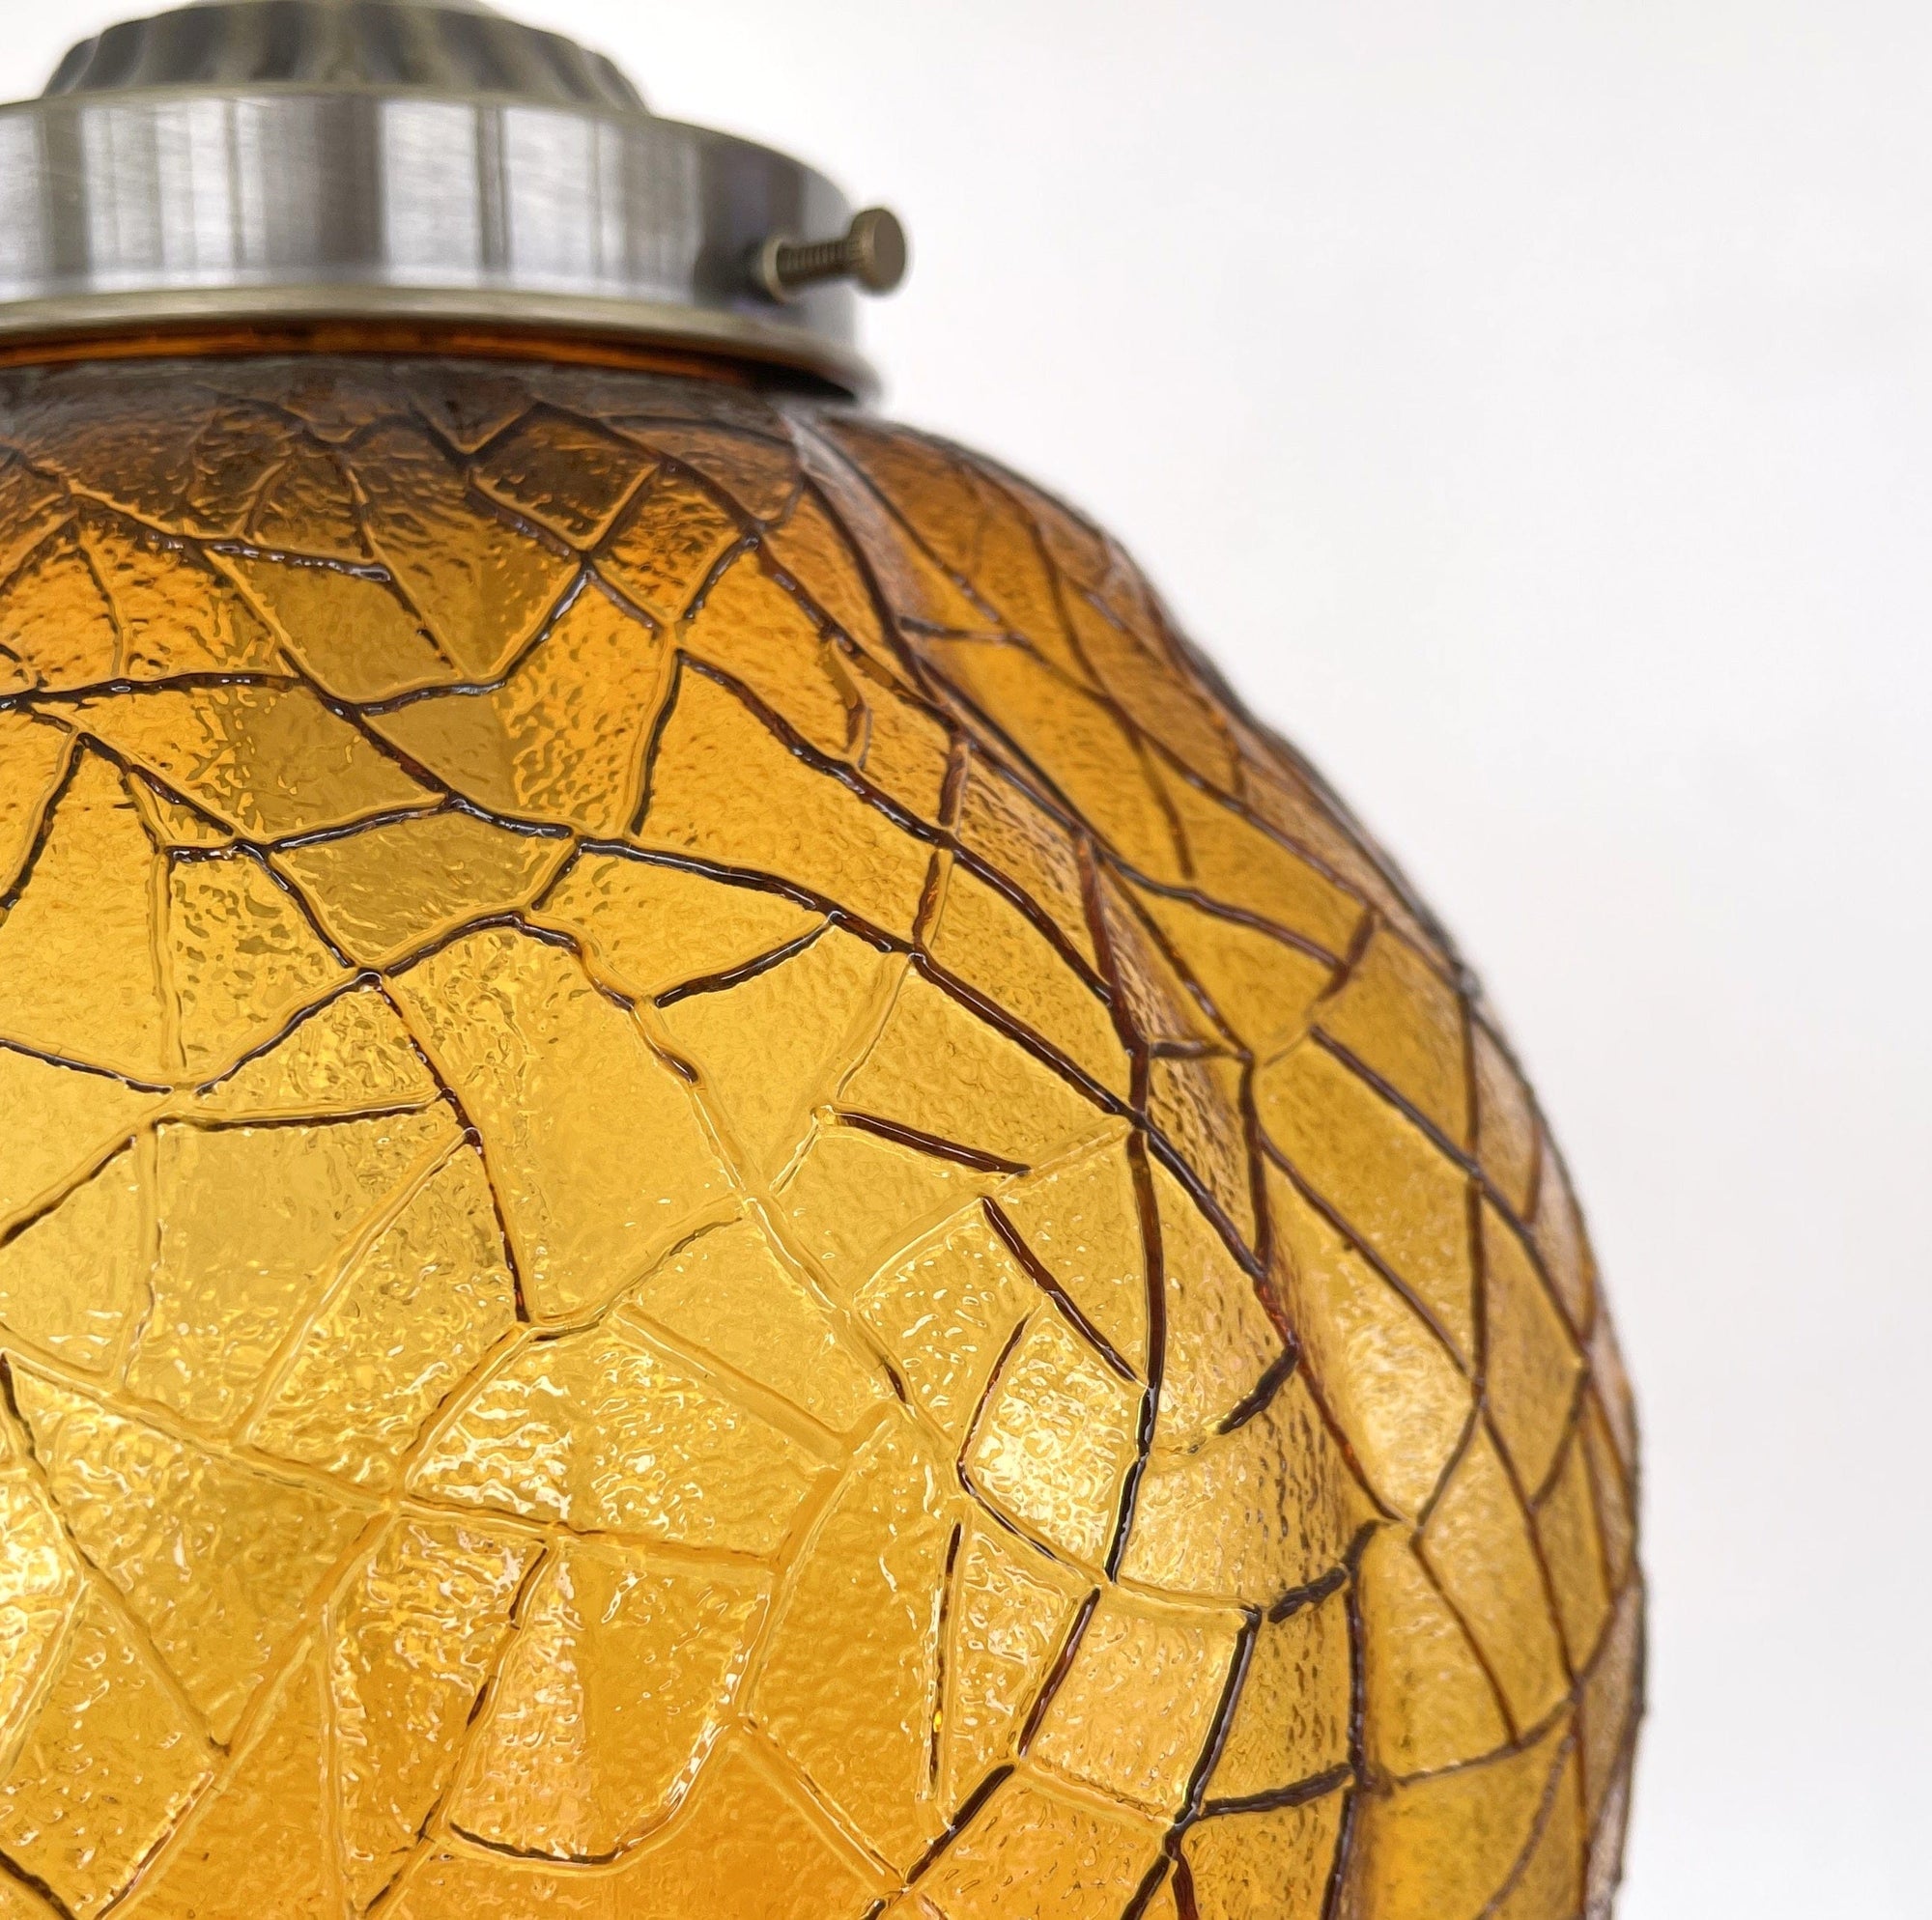 Amber Retro 1970's Antique Glass Chandelier Light Fixture The Lamp Goods